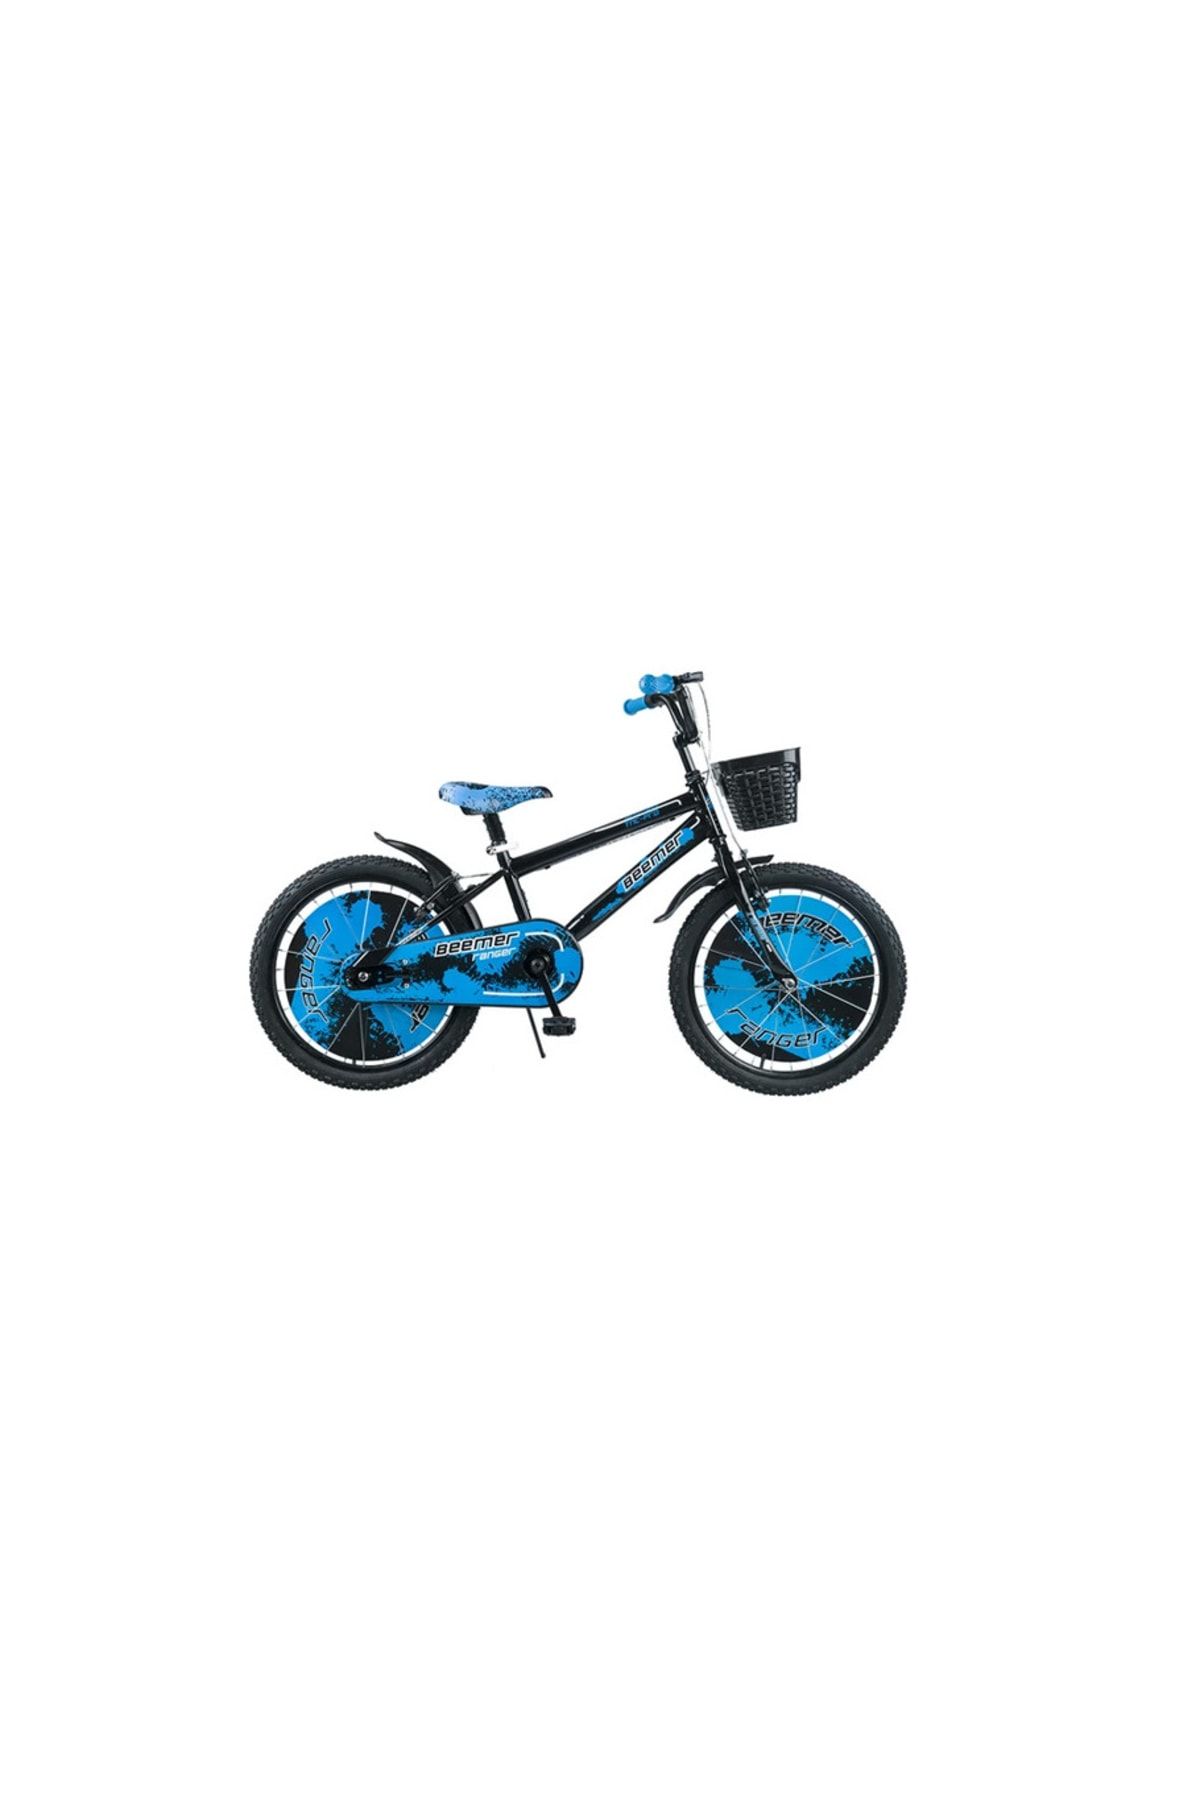 Tunca Çocuk Bisikleti Mavi Sepetli 20 Jant Çocuk Bisikleti Bisiklet